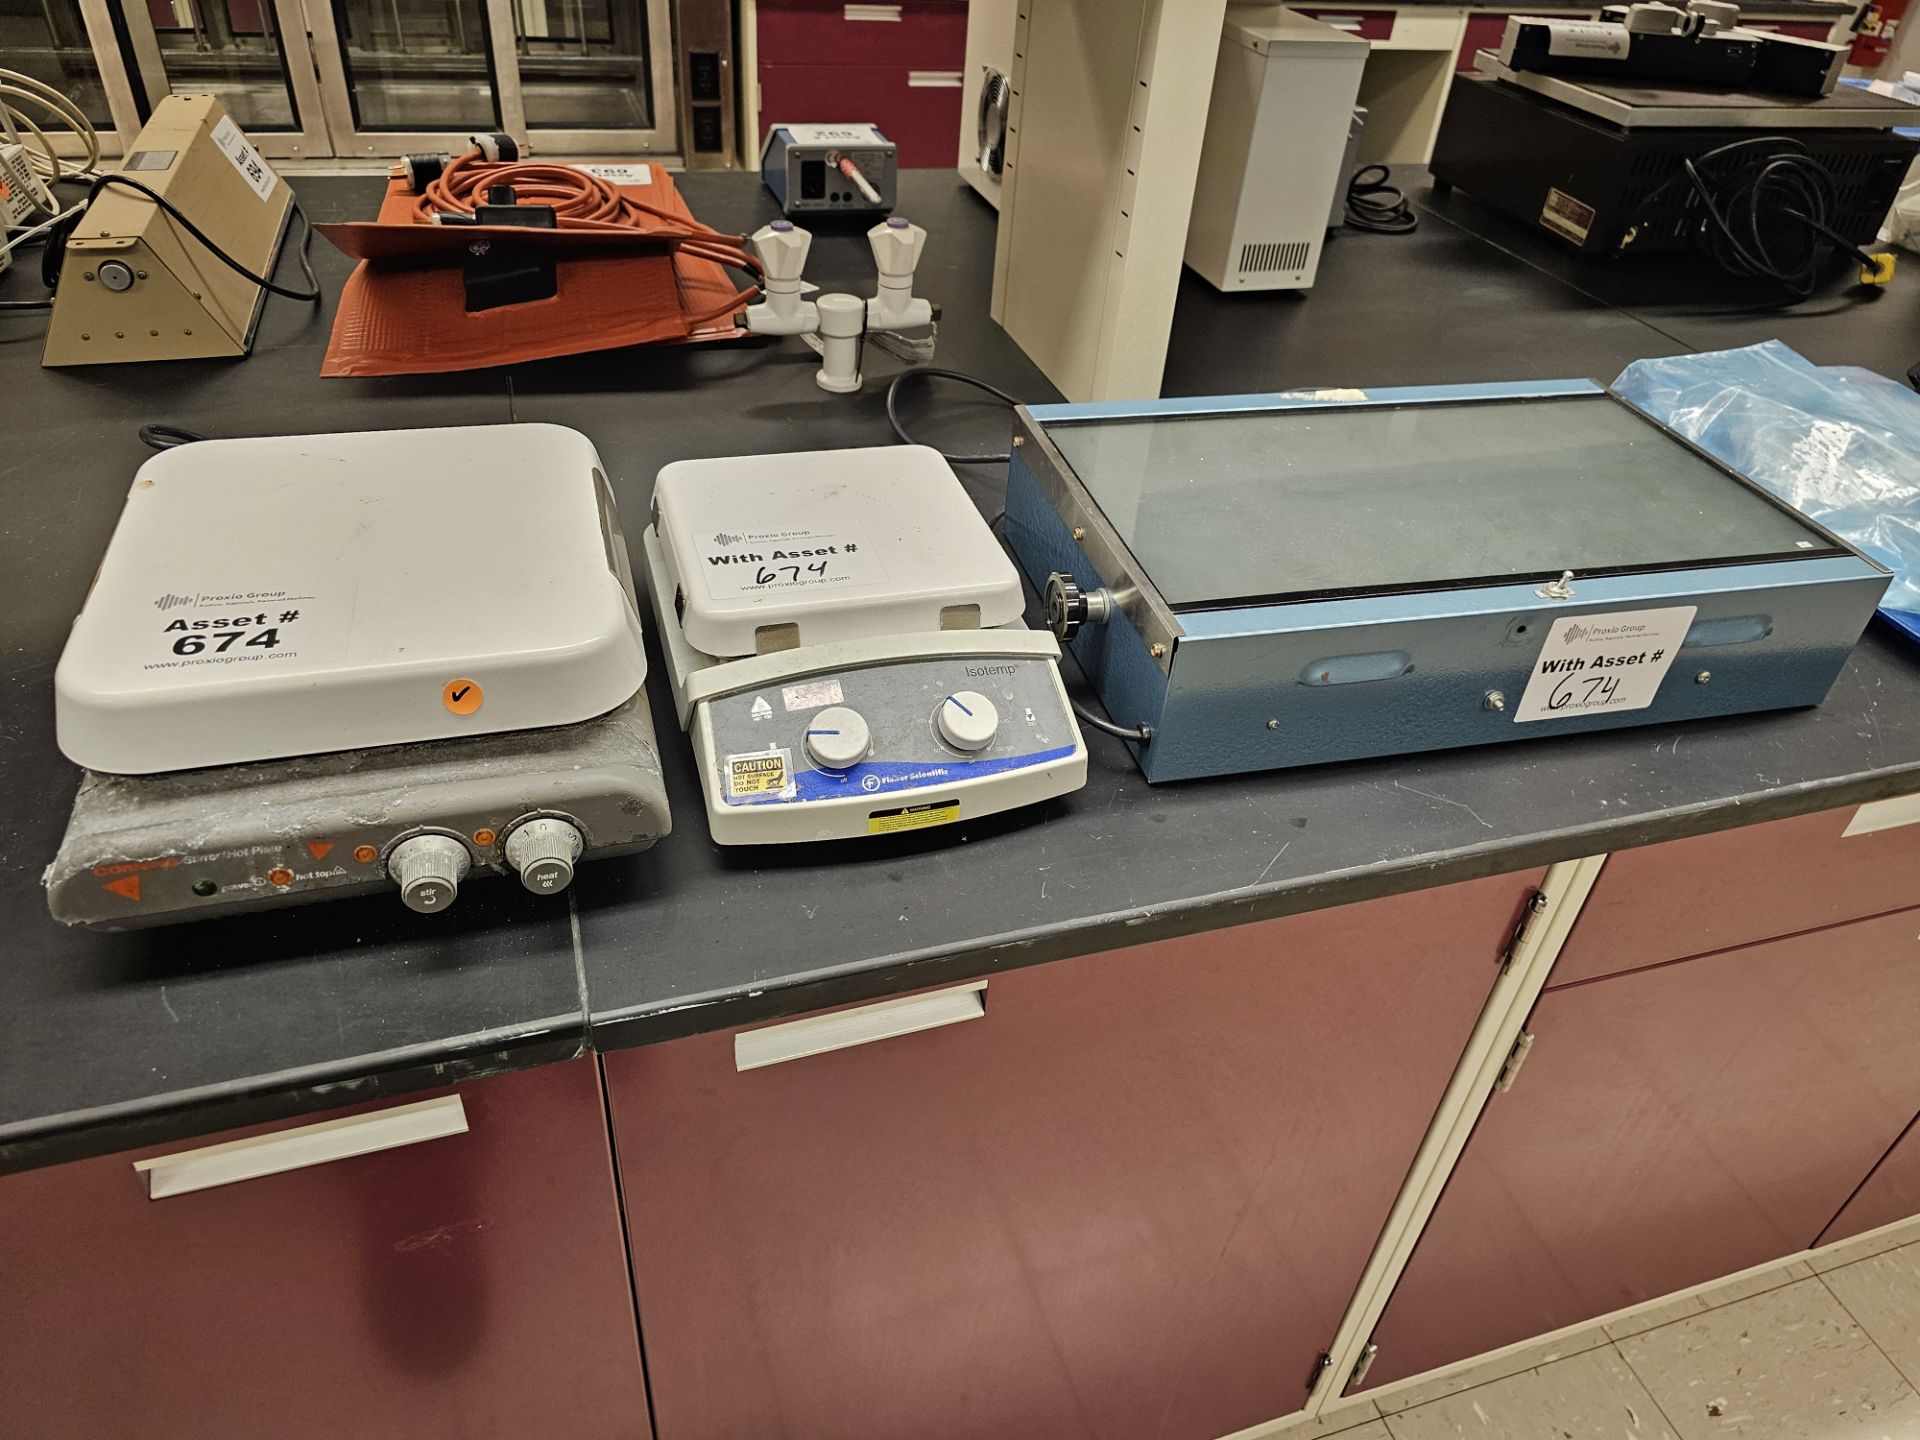 Lab equipment